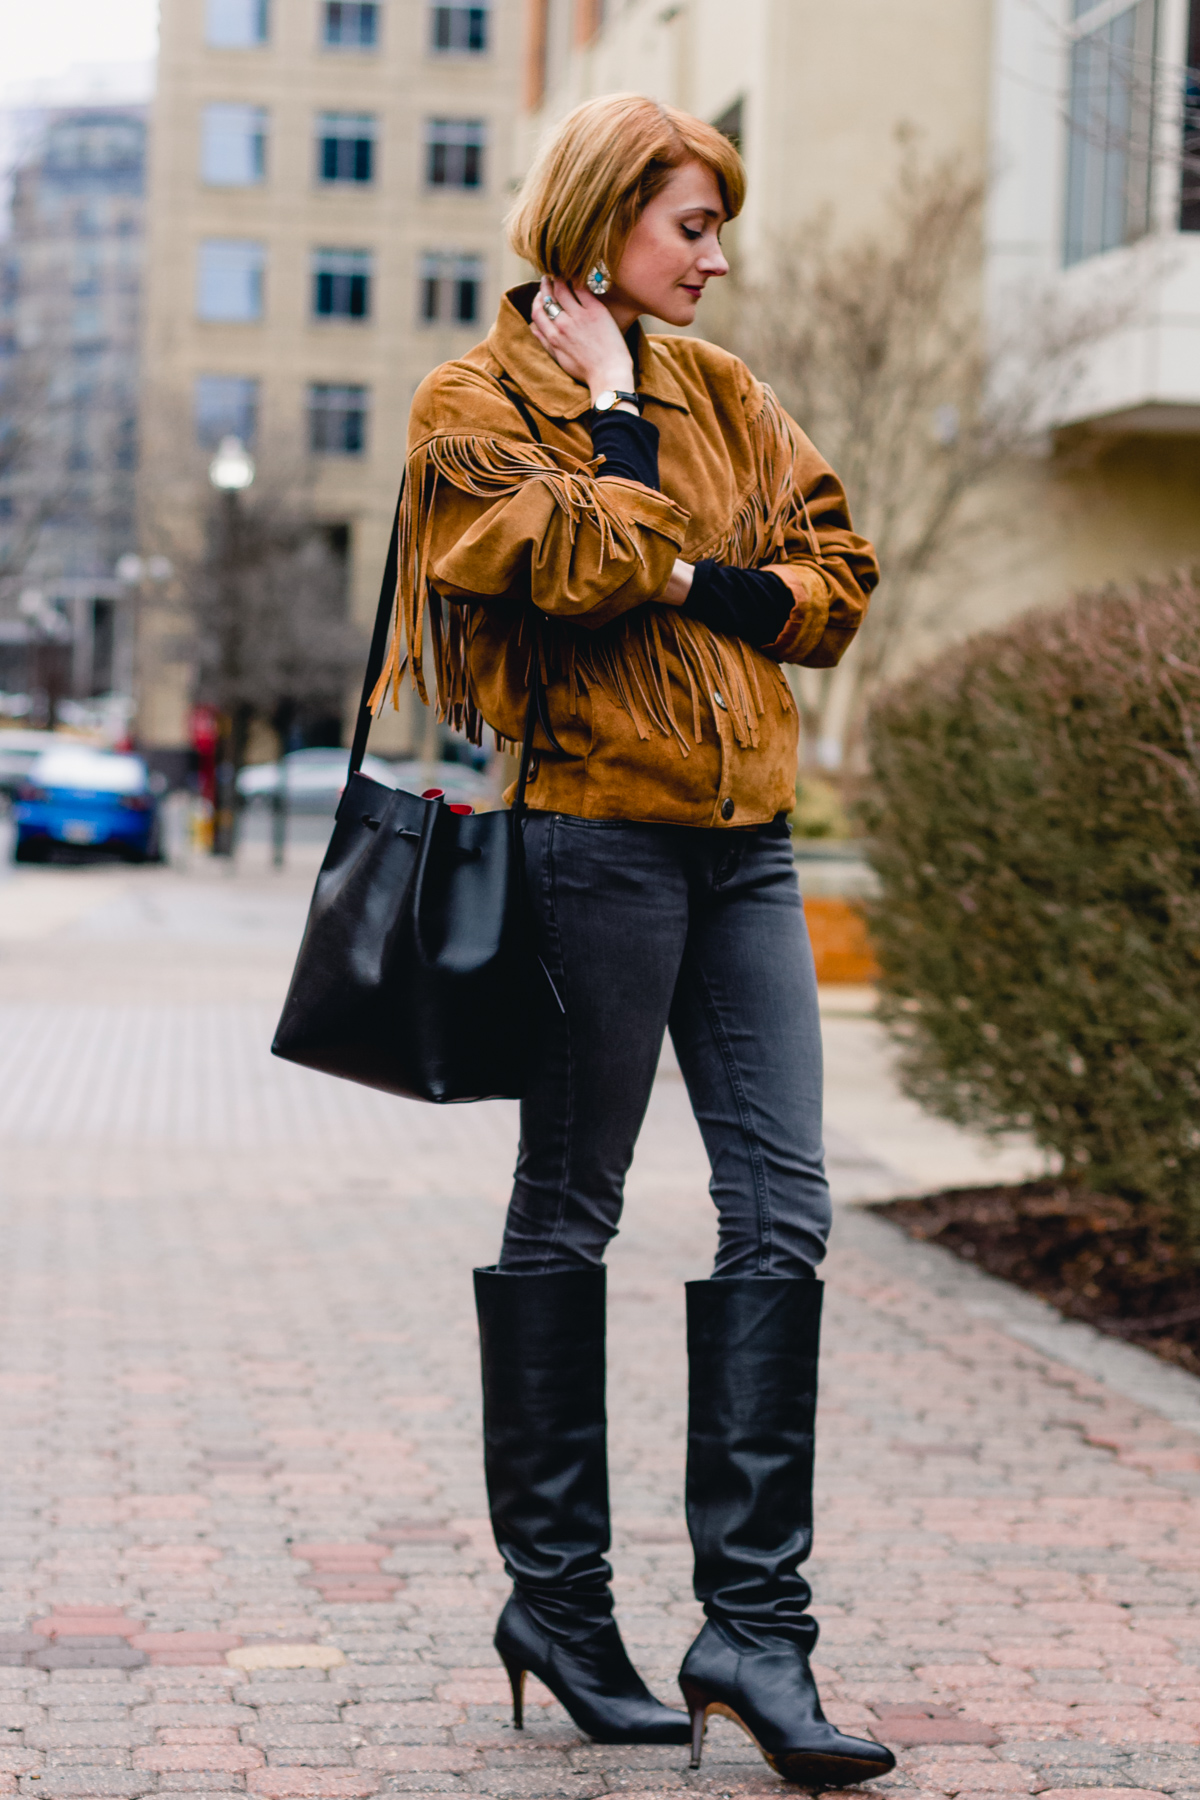 fringe leather jacket and slouchy boots